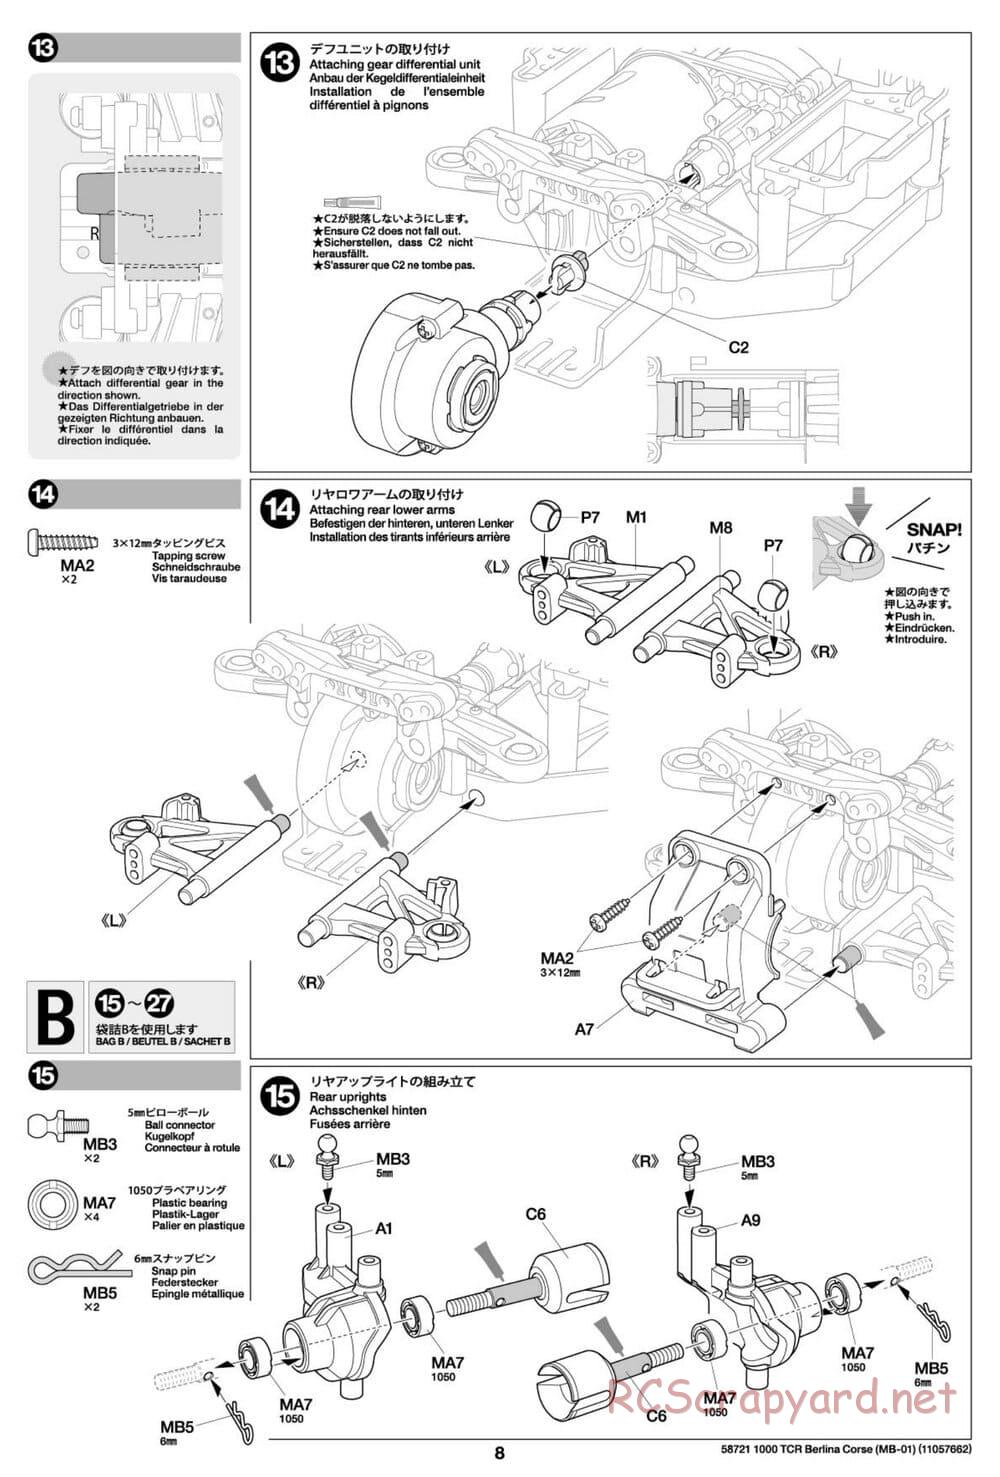 Tamiya - Fiat Abarth 1000 TCR Berlina Corsa - MB-01 Chassis - Manual - Page 8